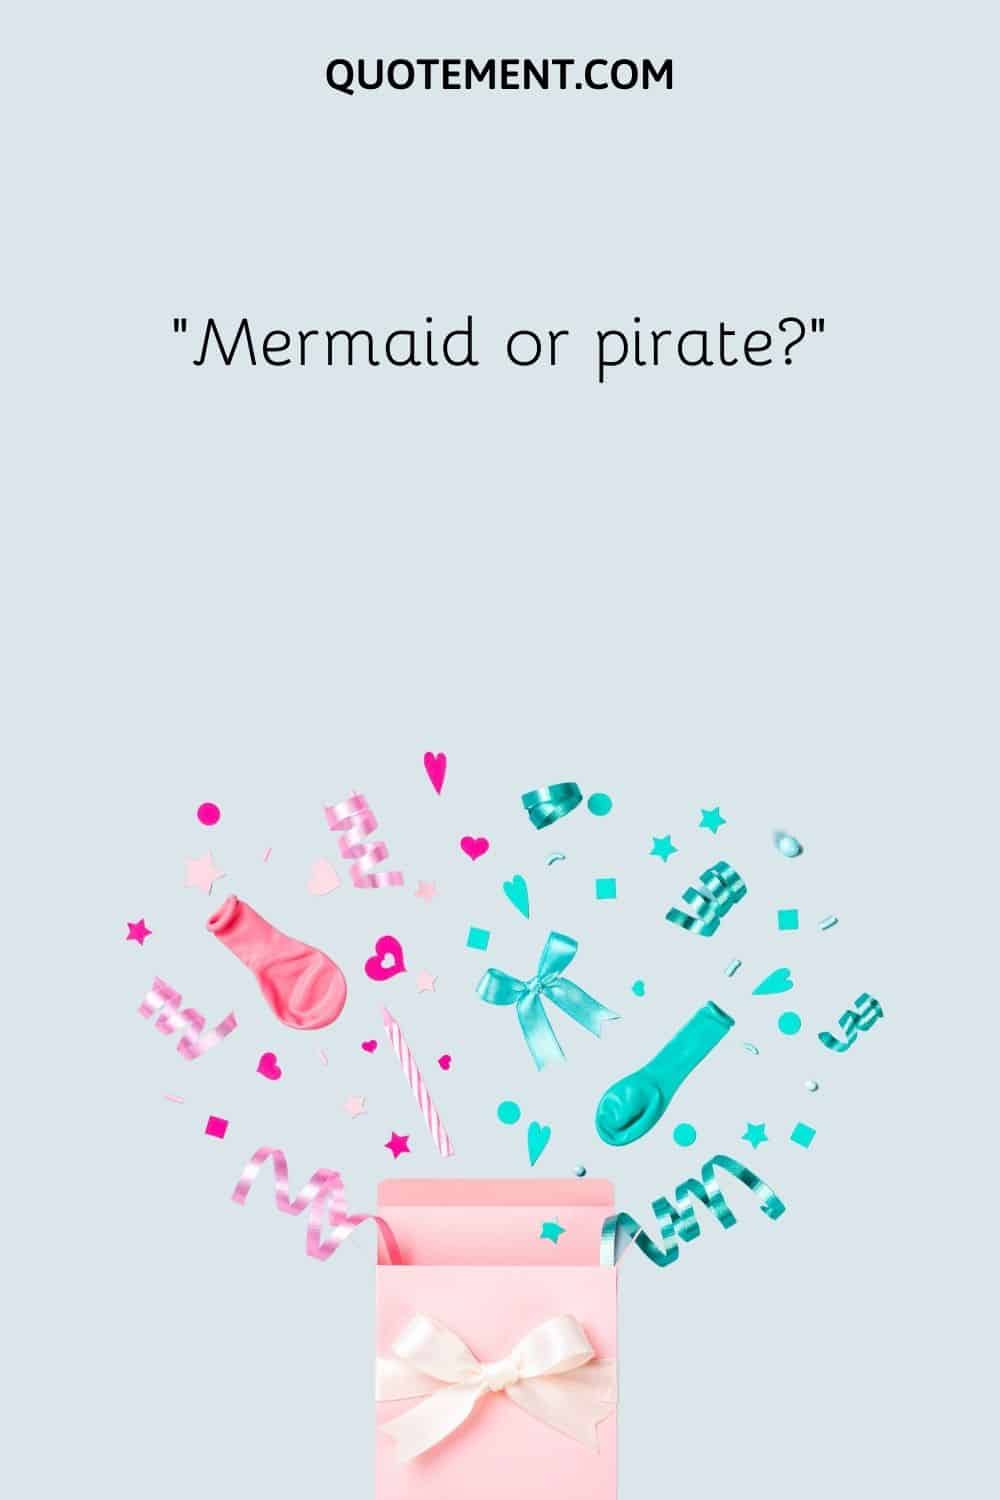 Mermaid or pirate